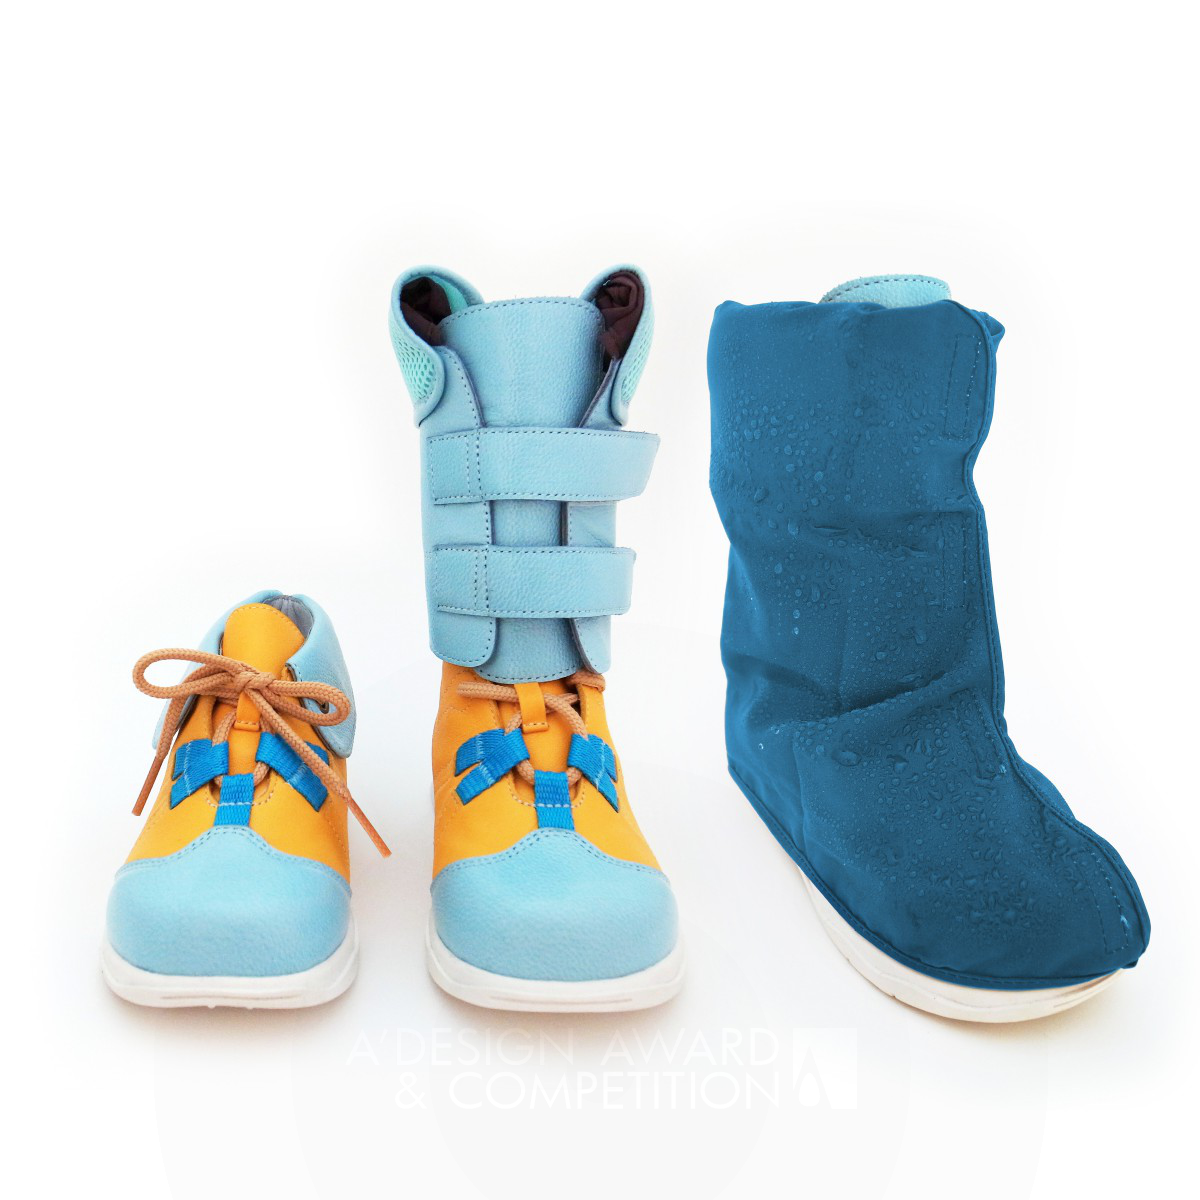 weatherproof kids shoes by GIDER CO.,LTD.